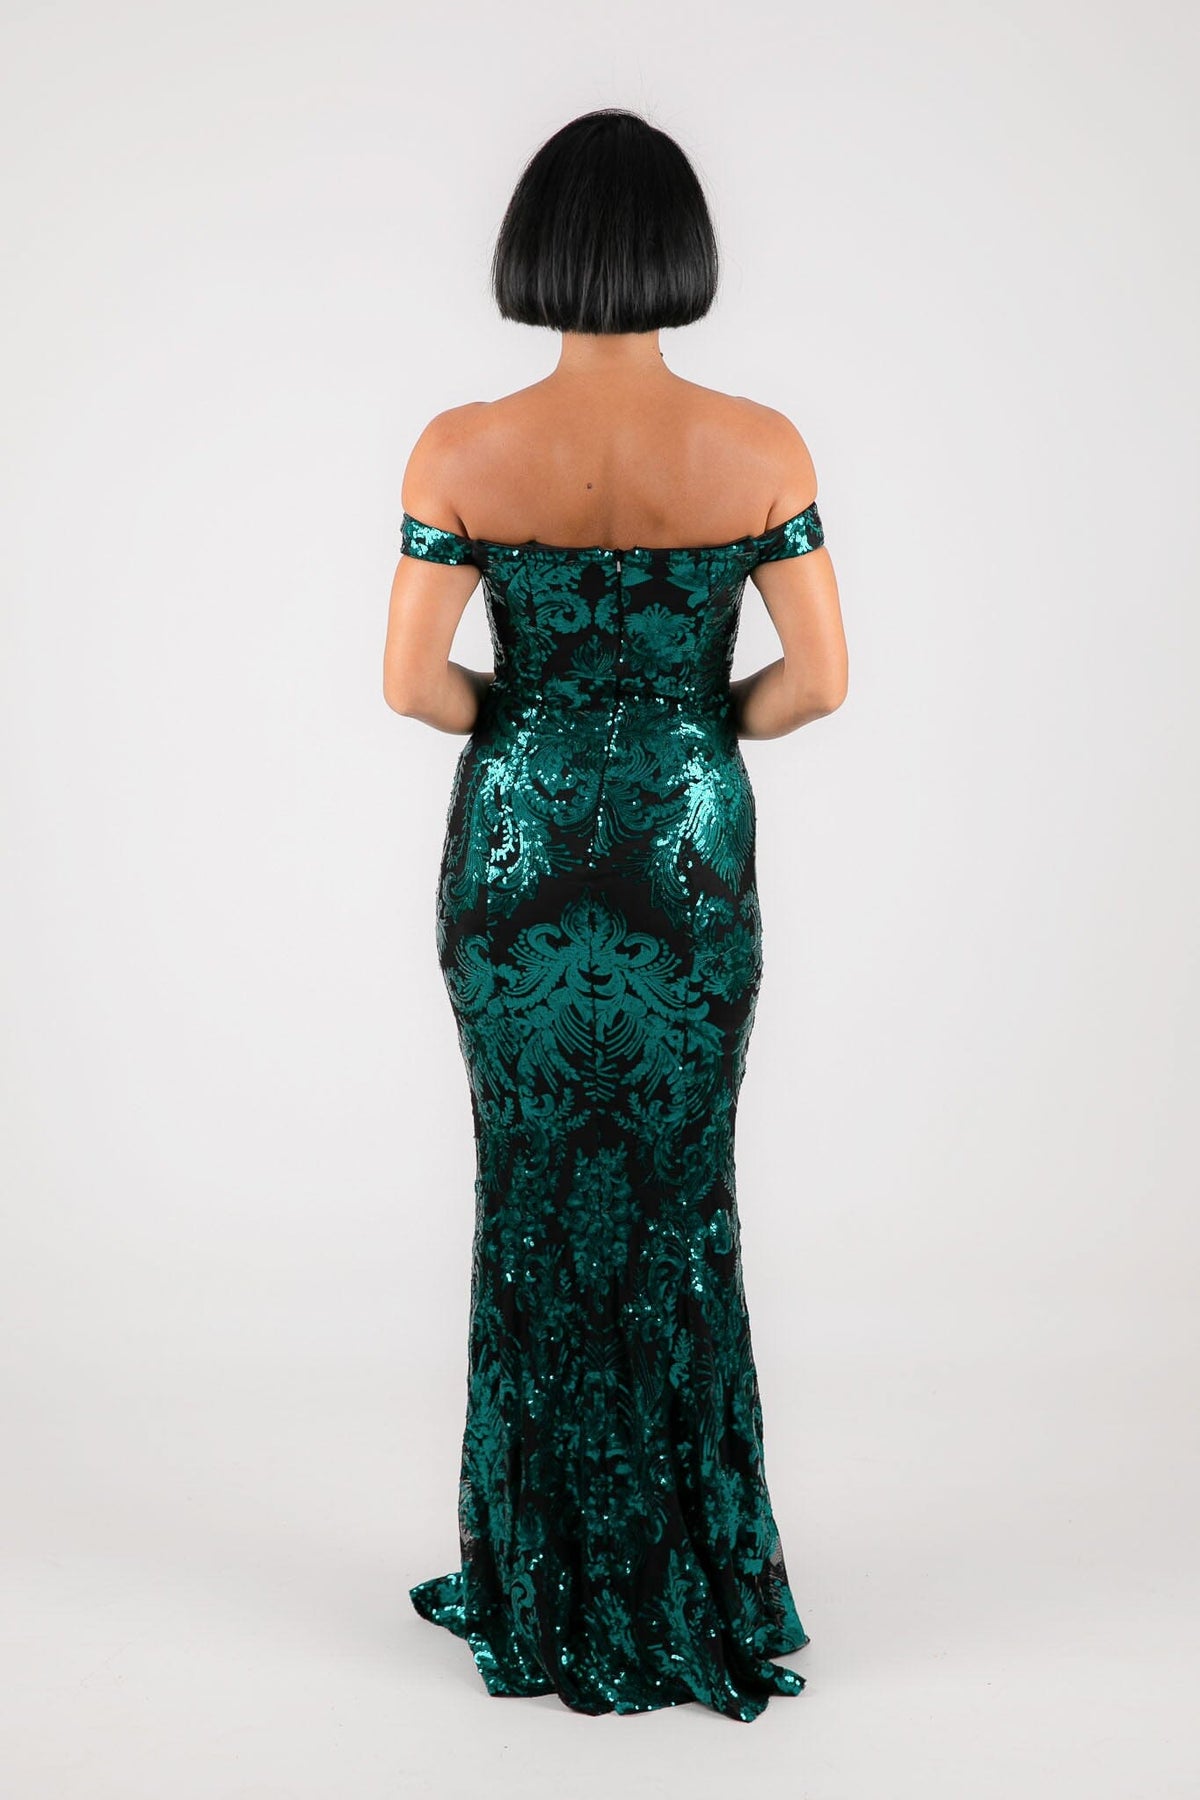 Open Shoulder Design of Emerald Green Sequins with Black Underlay Off Shoulder Full Length Maxi Dress with V Cut Out Neckline Detail and Slit on the Left Leg